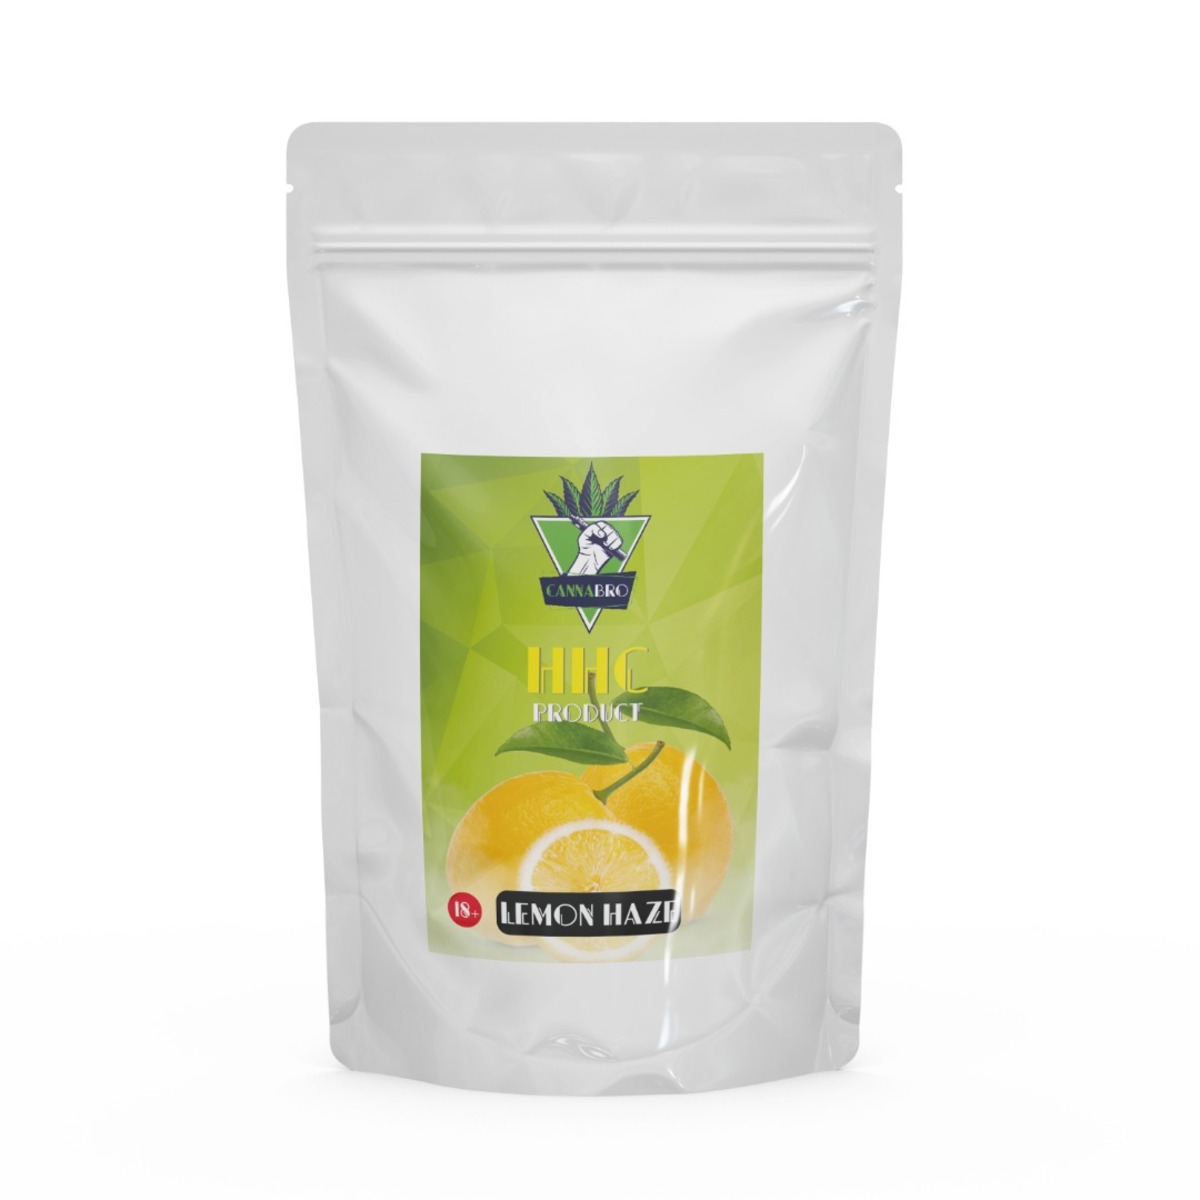 CannaBro HHC Product Lemon